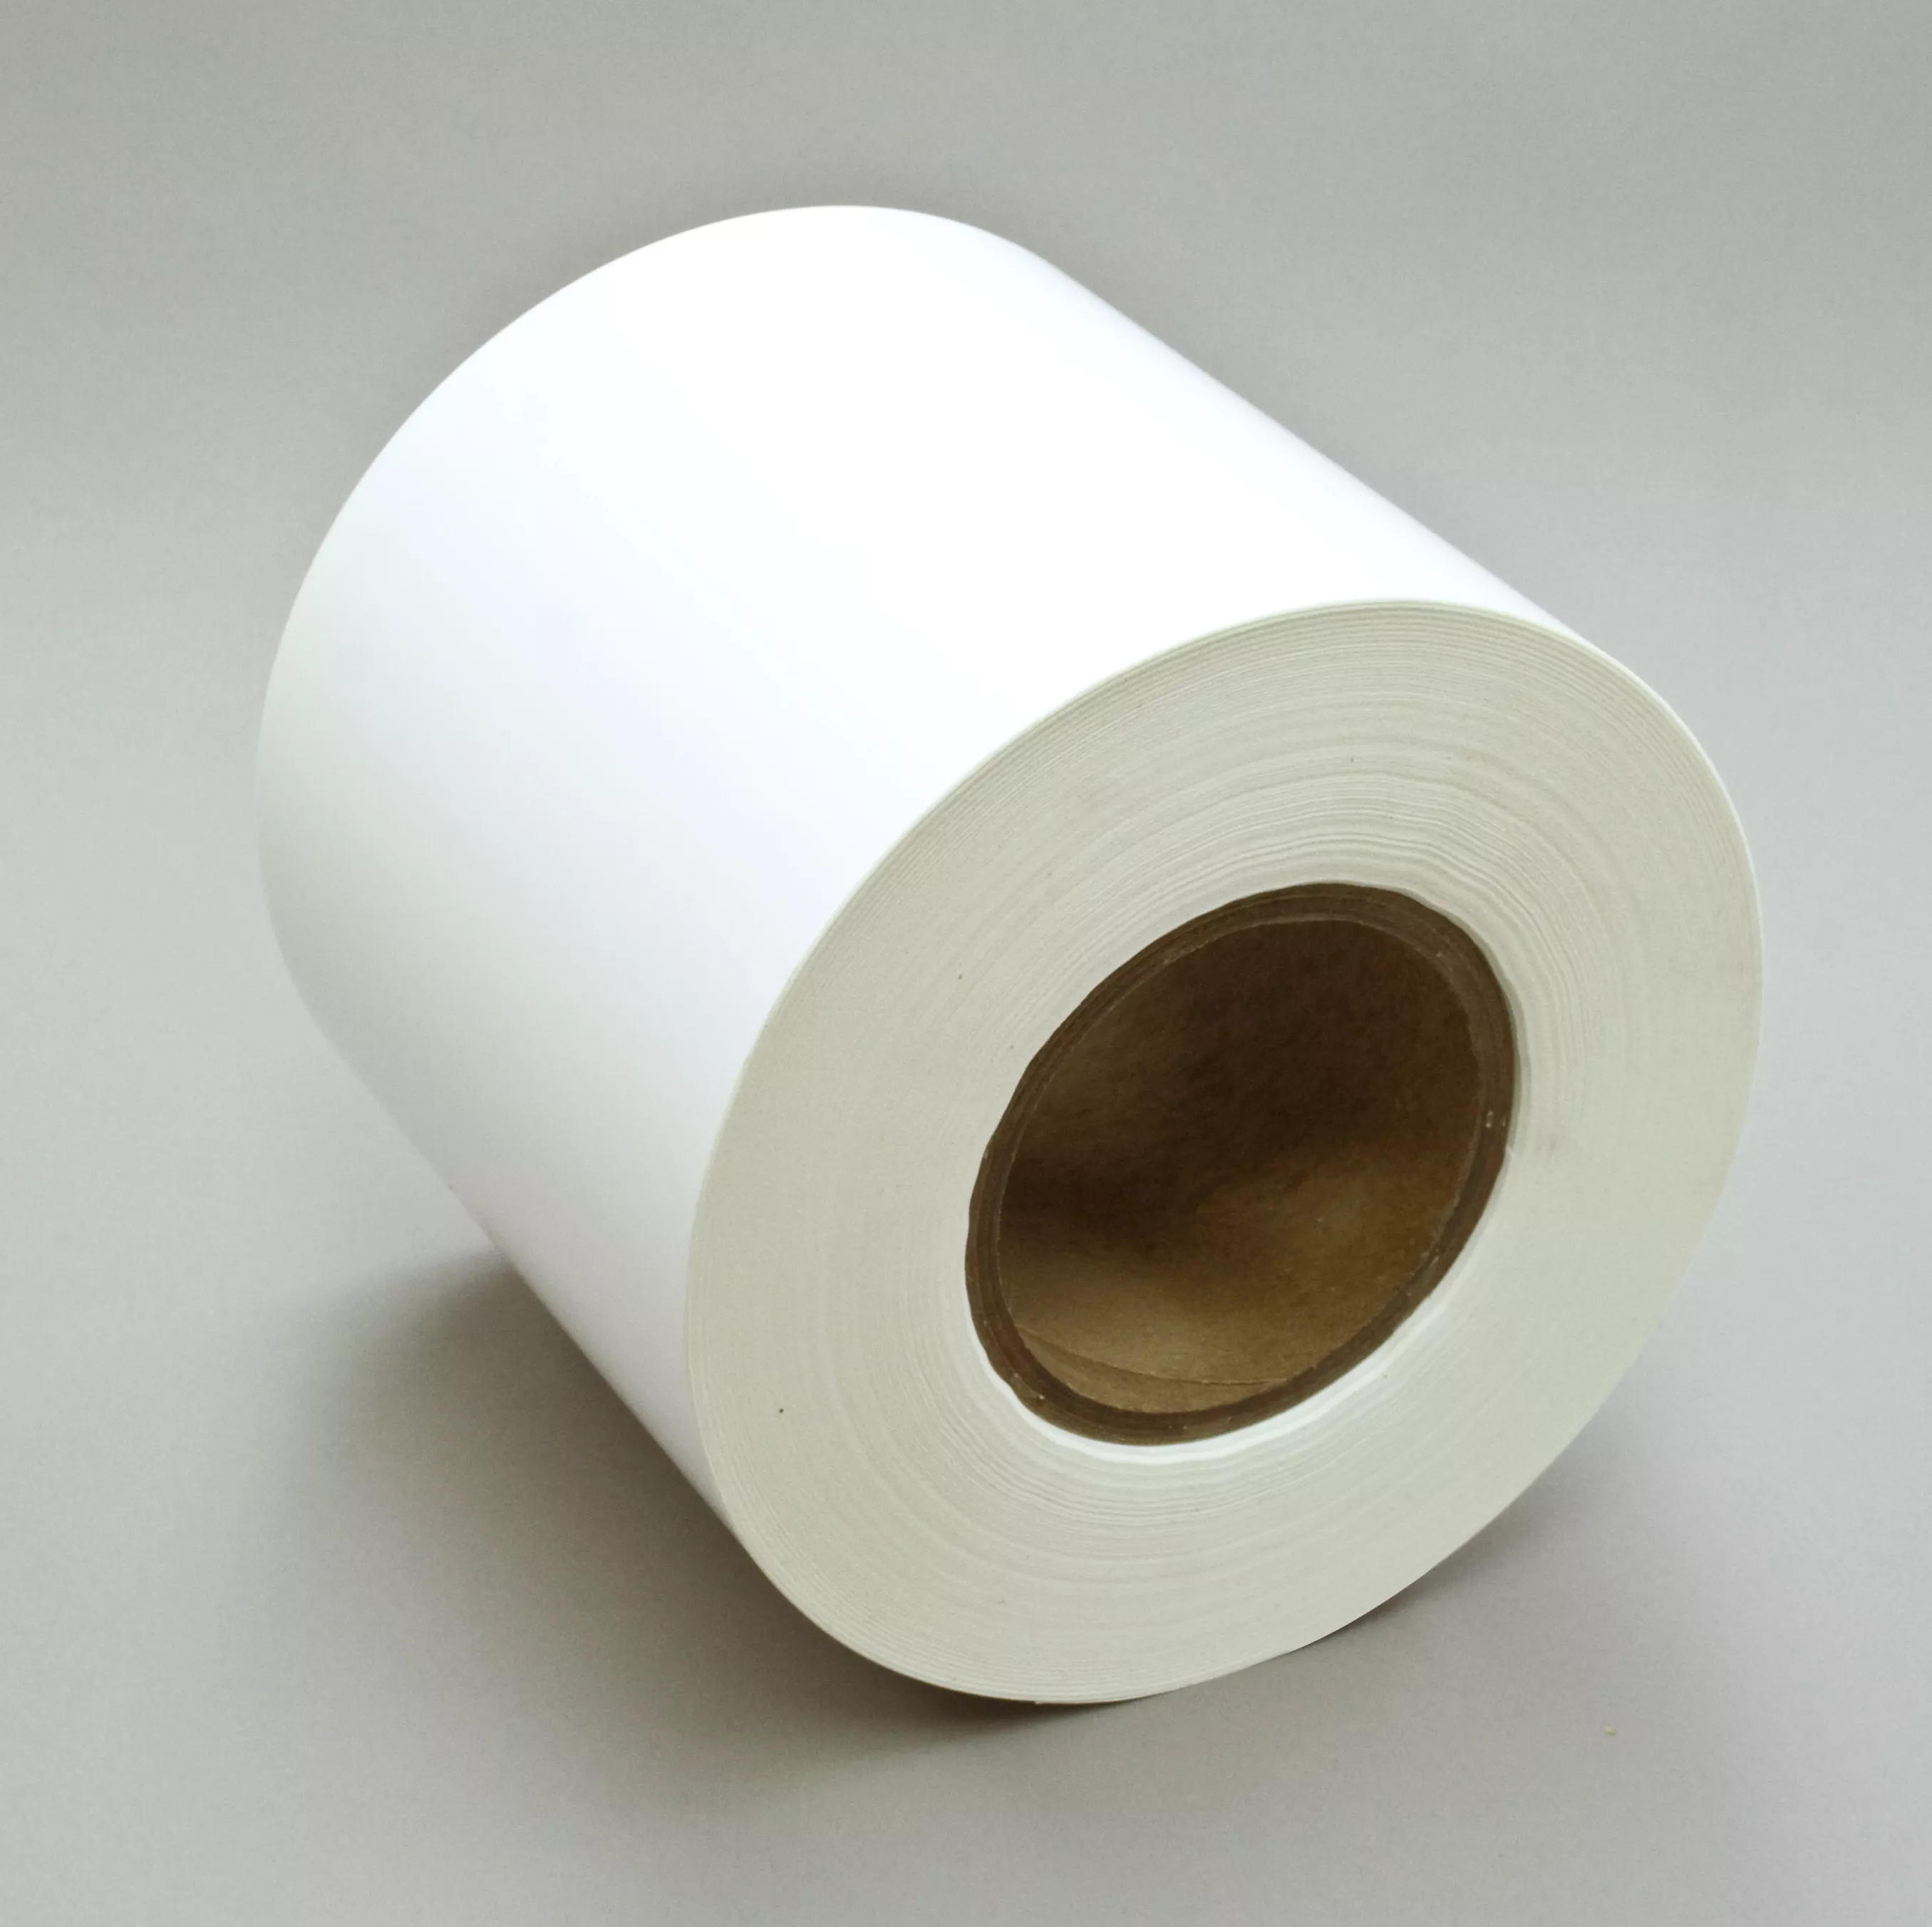 3M™ Dot Matrix Label Material 7880, White Polyester Matte Laser, 6 in x
1668 ft, 1 Roll/Case